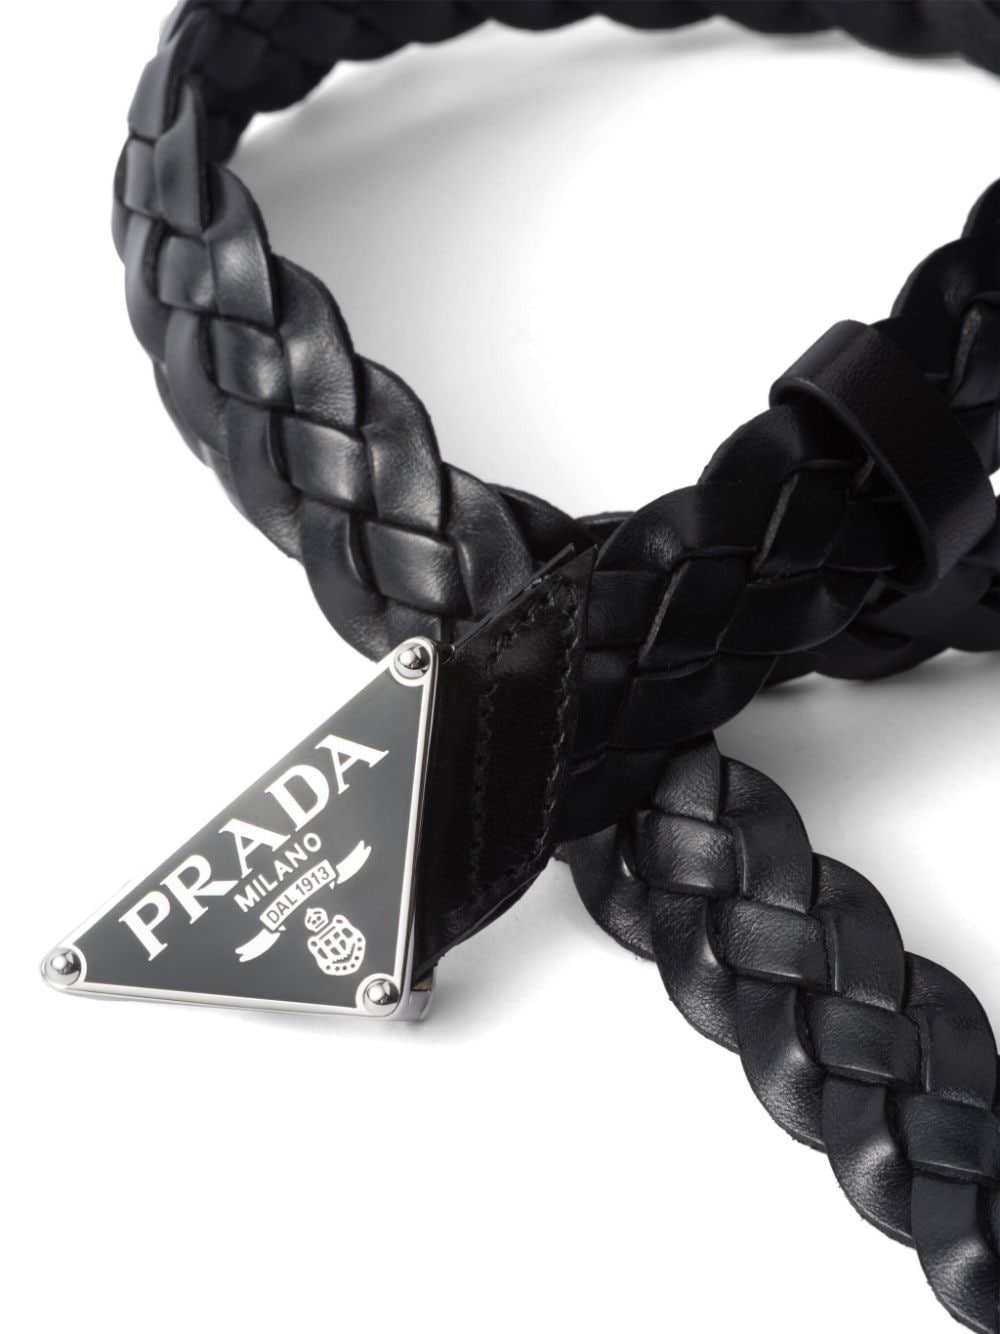 Triangle-logo braided leather belt<BR/><BR/><BR/>